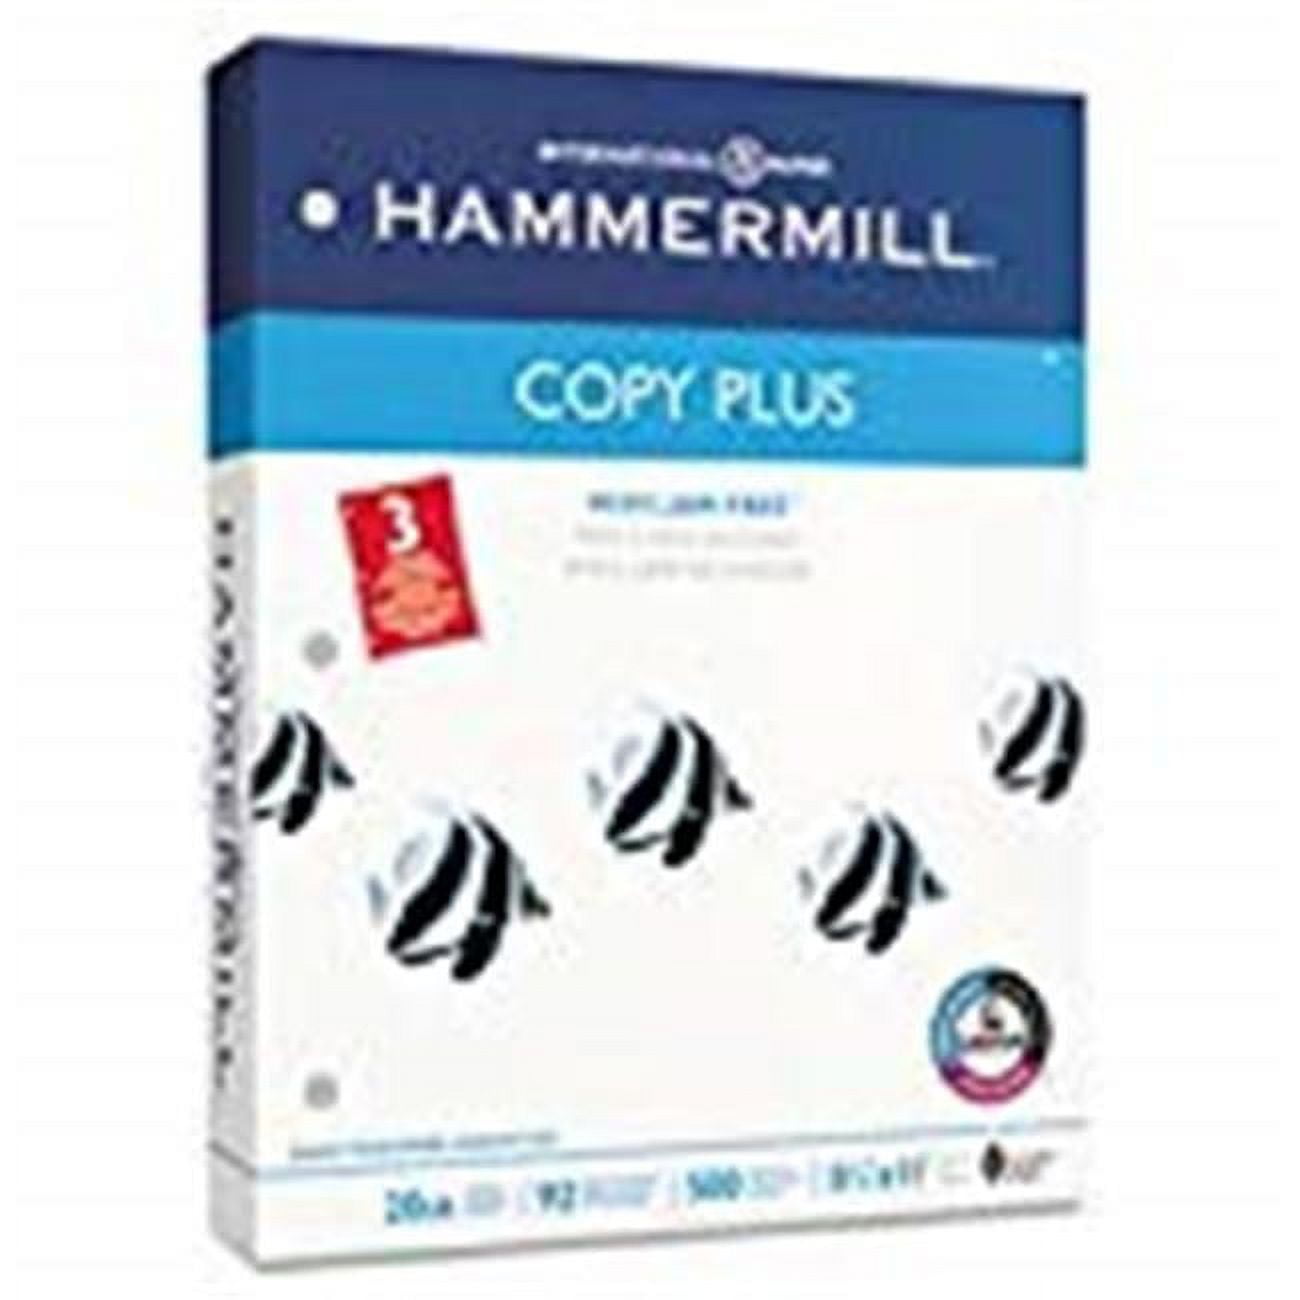 Hammermill Copy Plus 8.5 x 11 Copy Paper 1181122, White